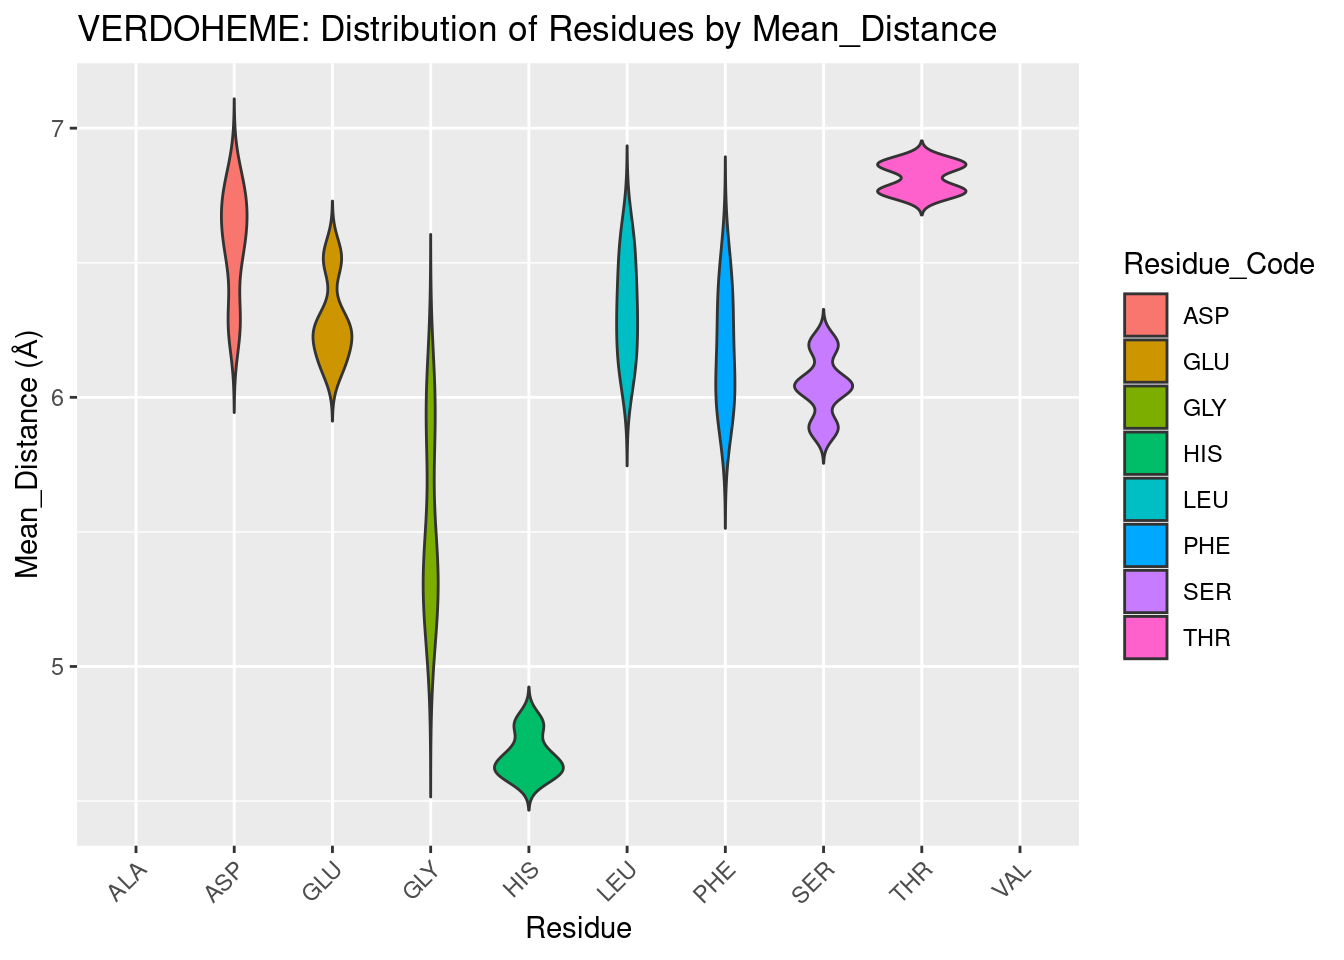 VERDOHEME: Residue Distribution by Distance